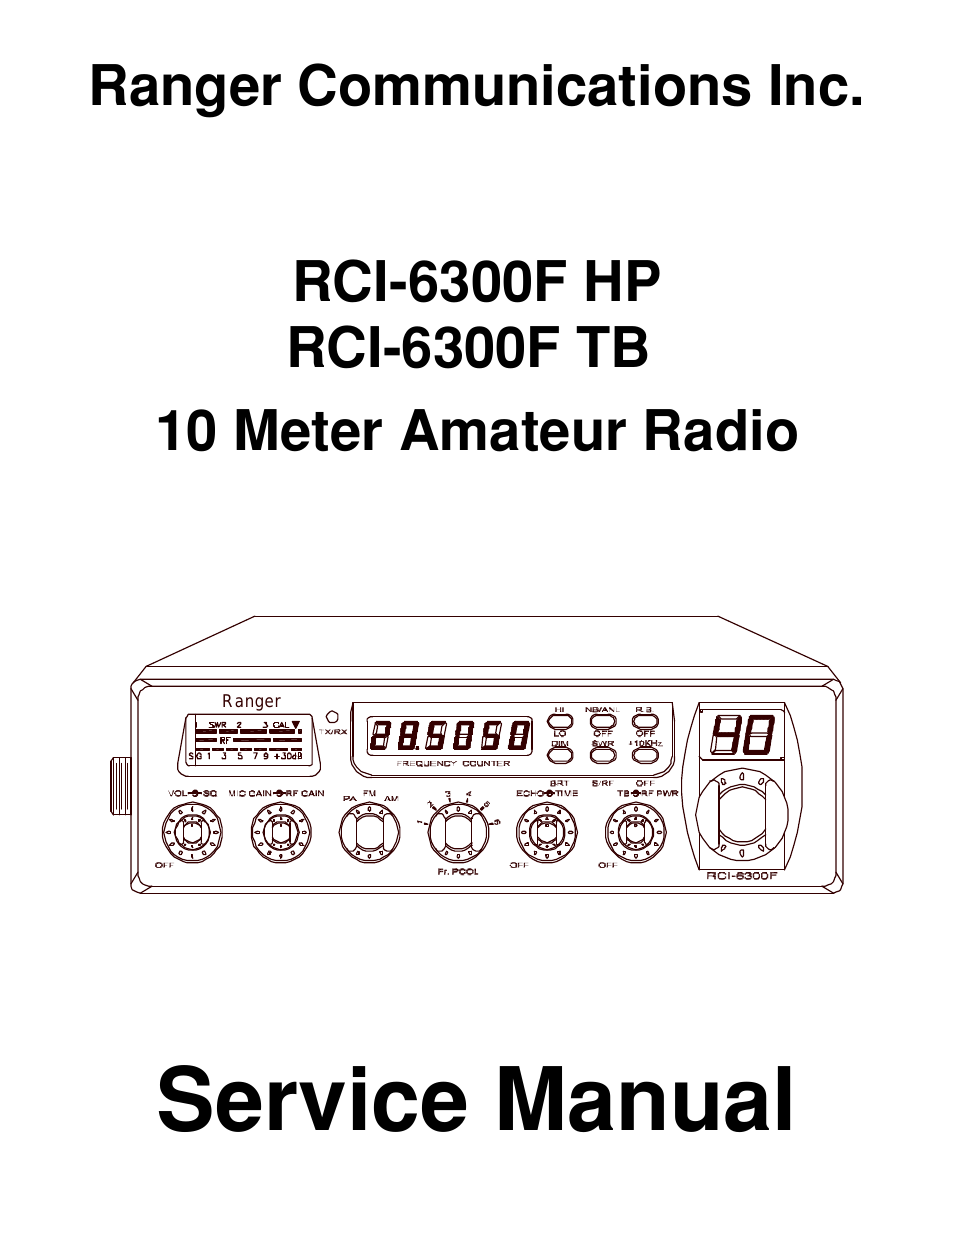 RCI-6300F TB